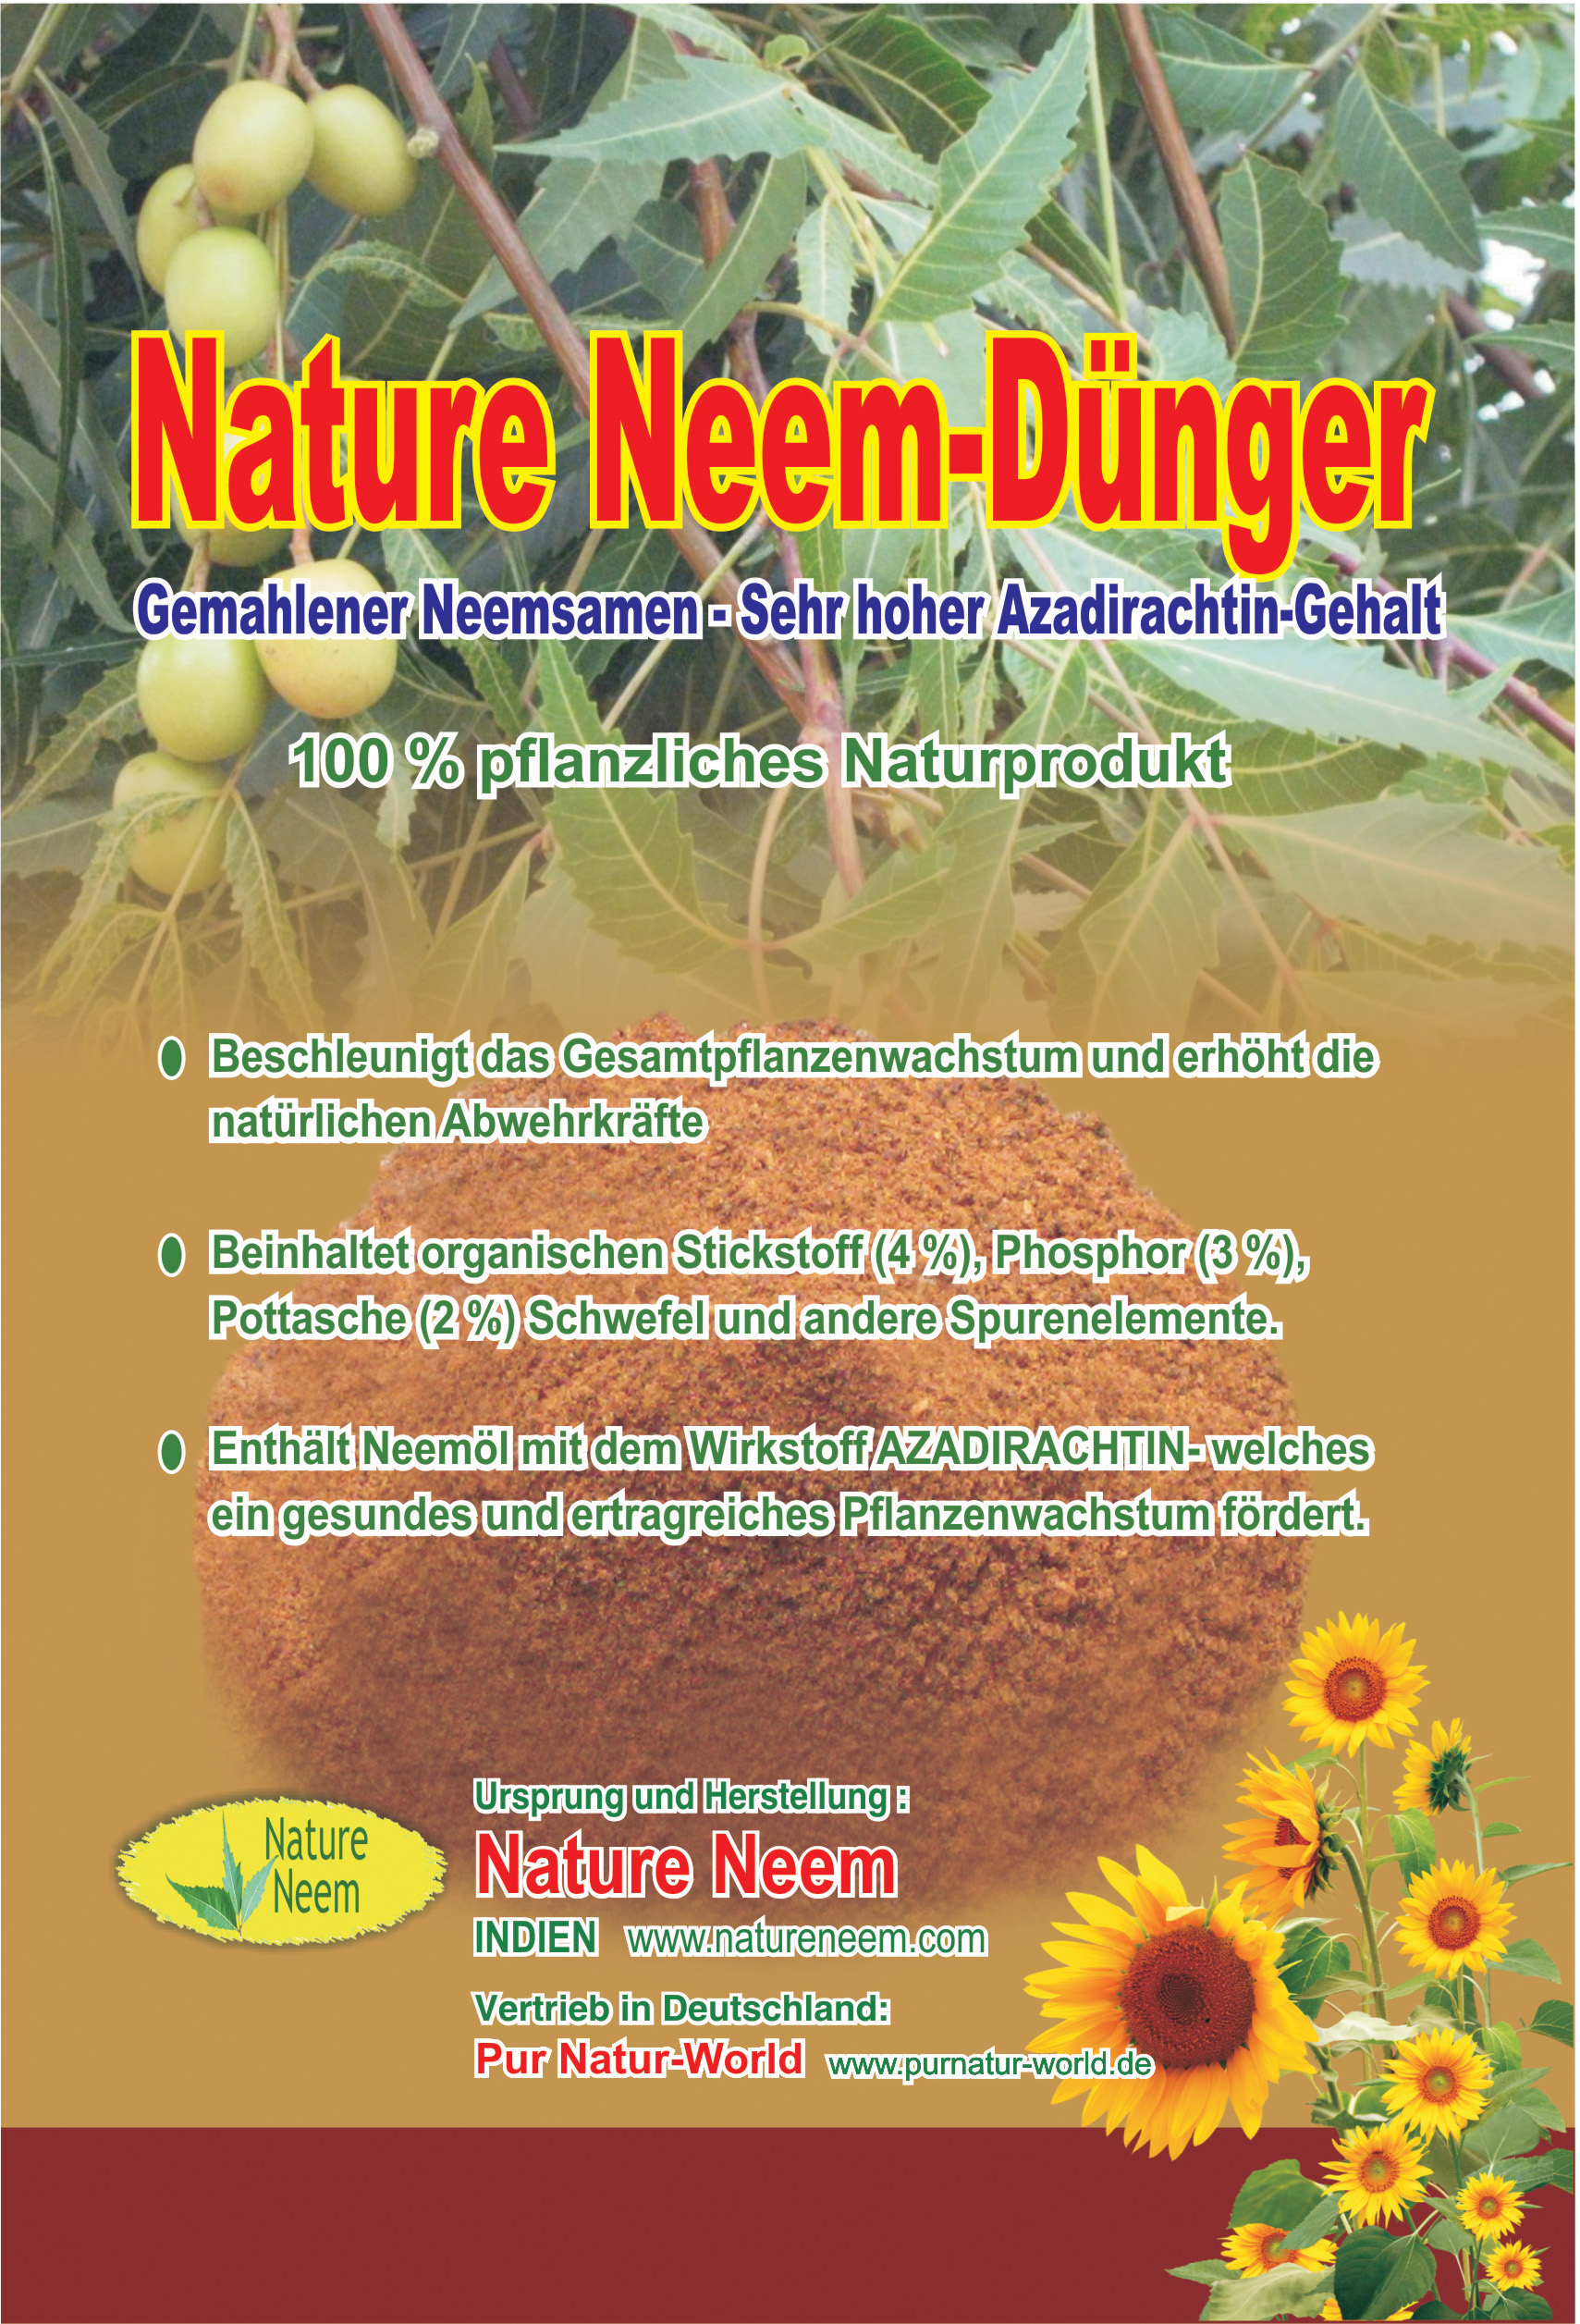 Ashok-neem seed power 6th  22-11-2011-page1a